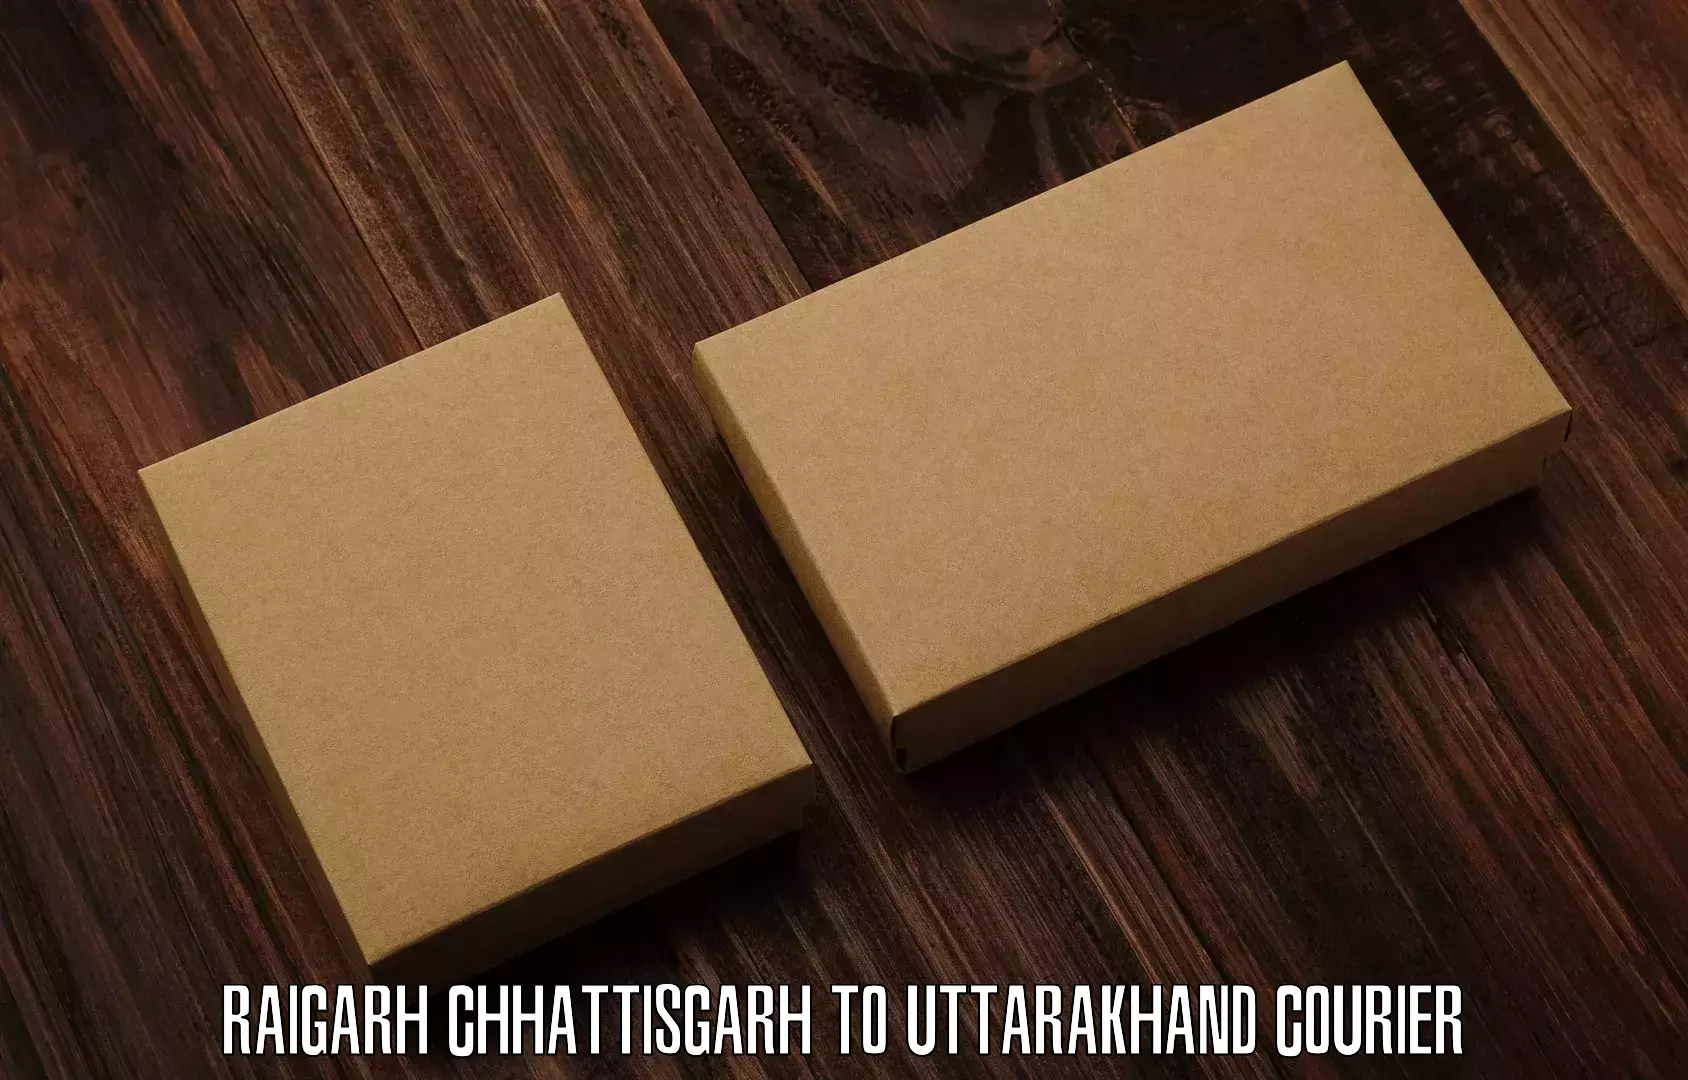 Express logistics providers Raigarh Chhattisgarh to Rishikesh